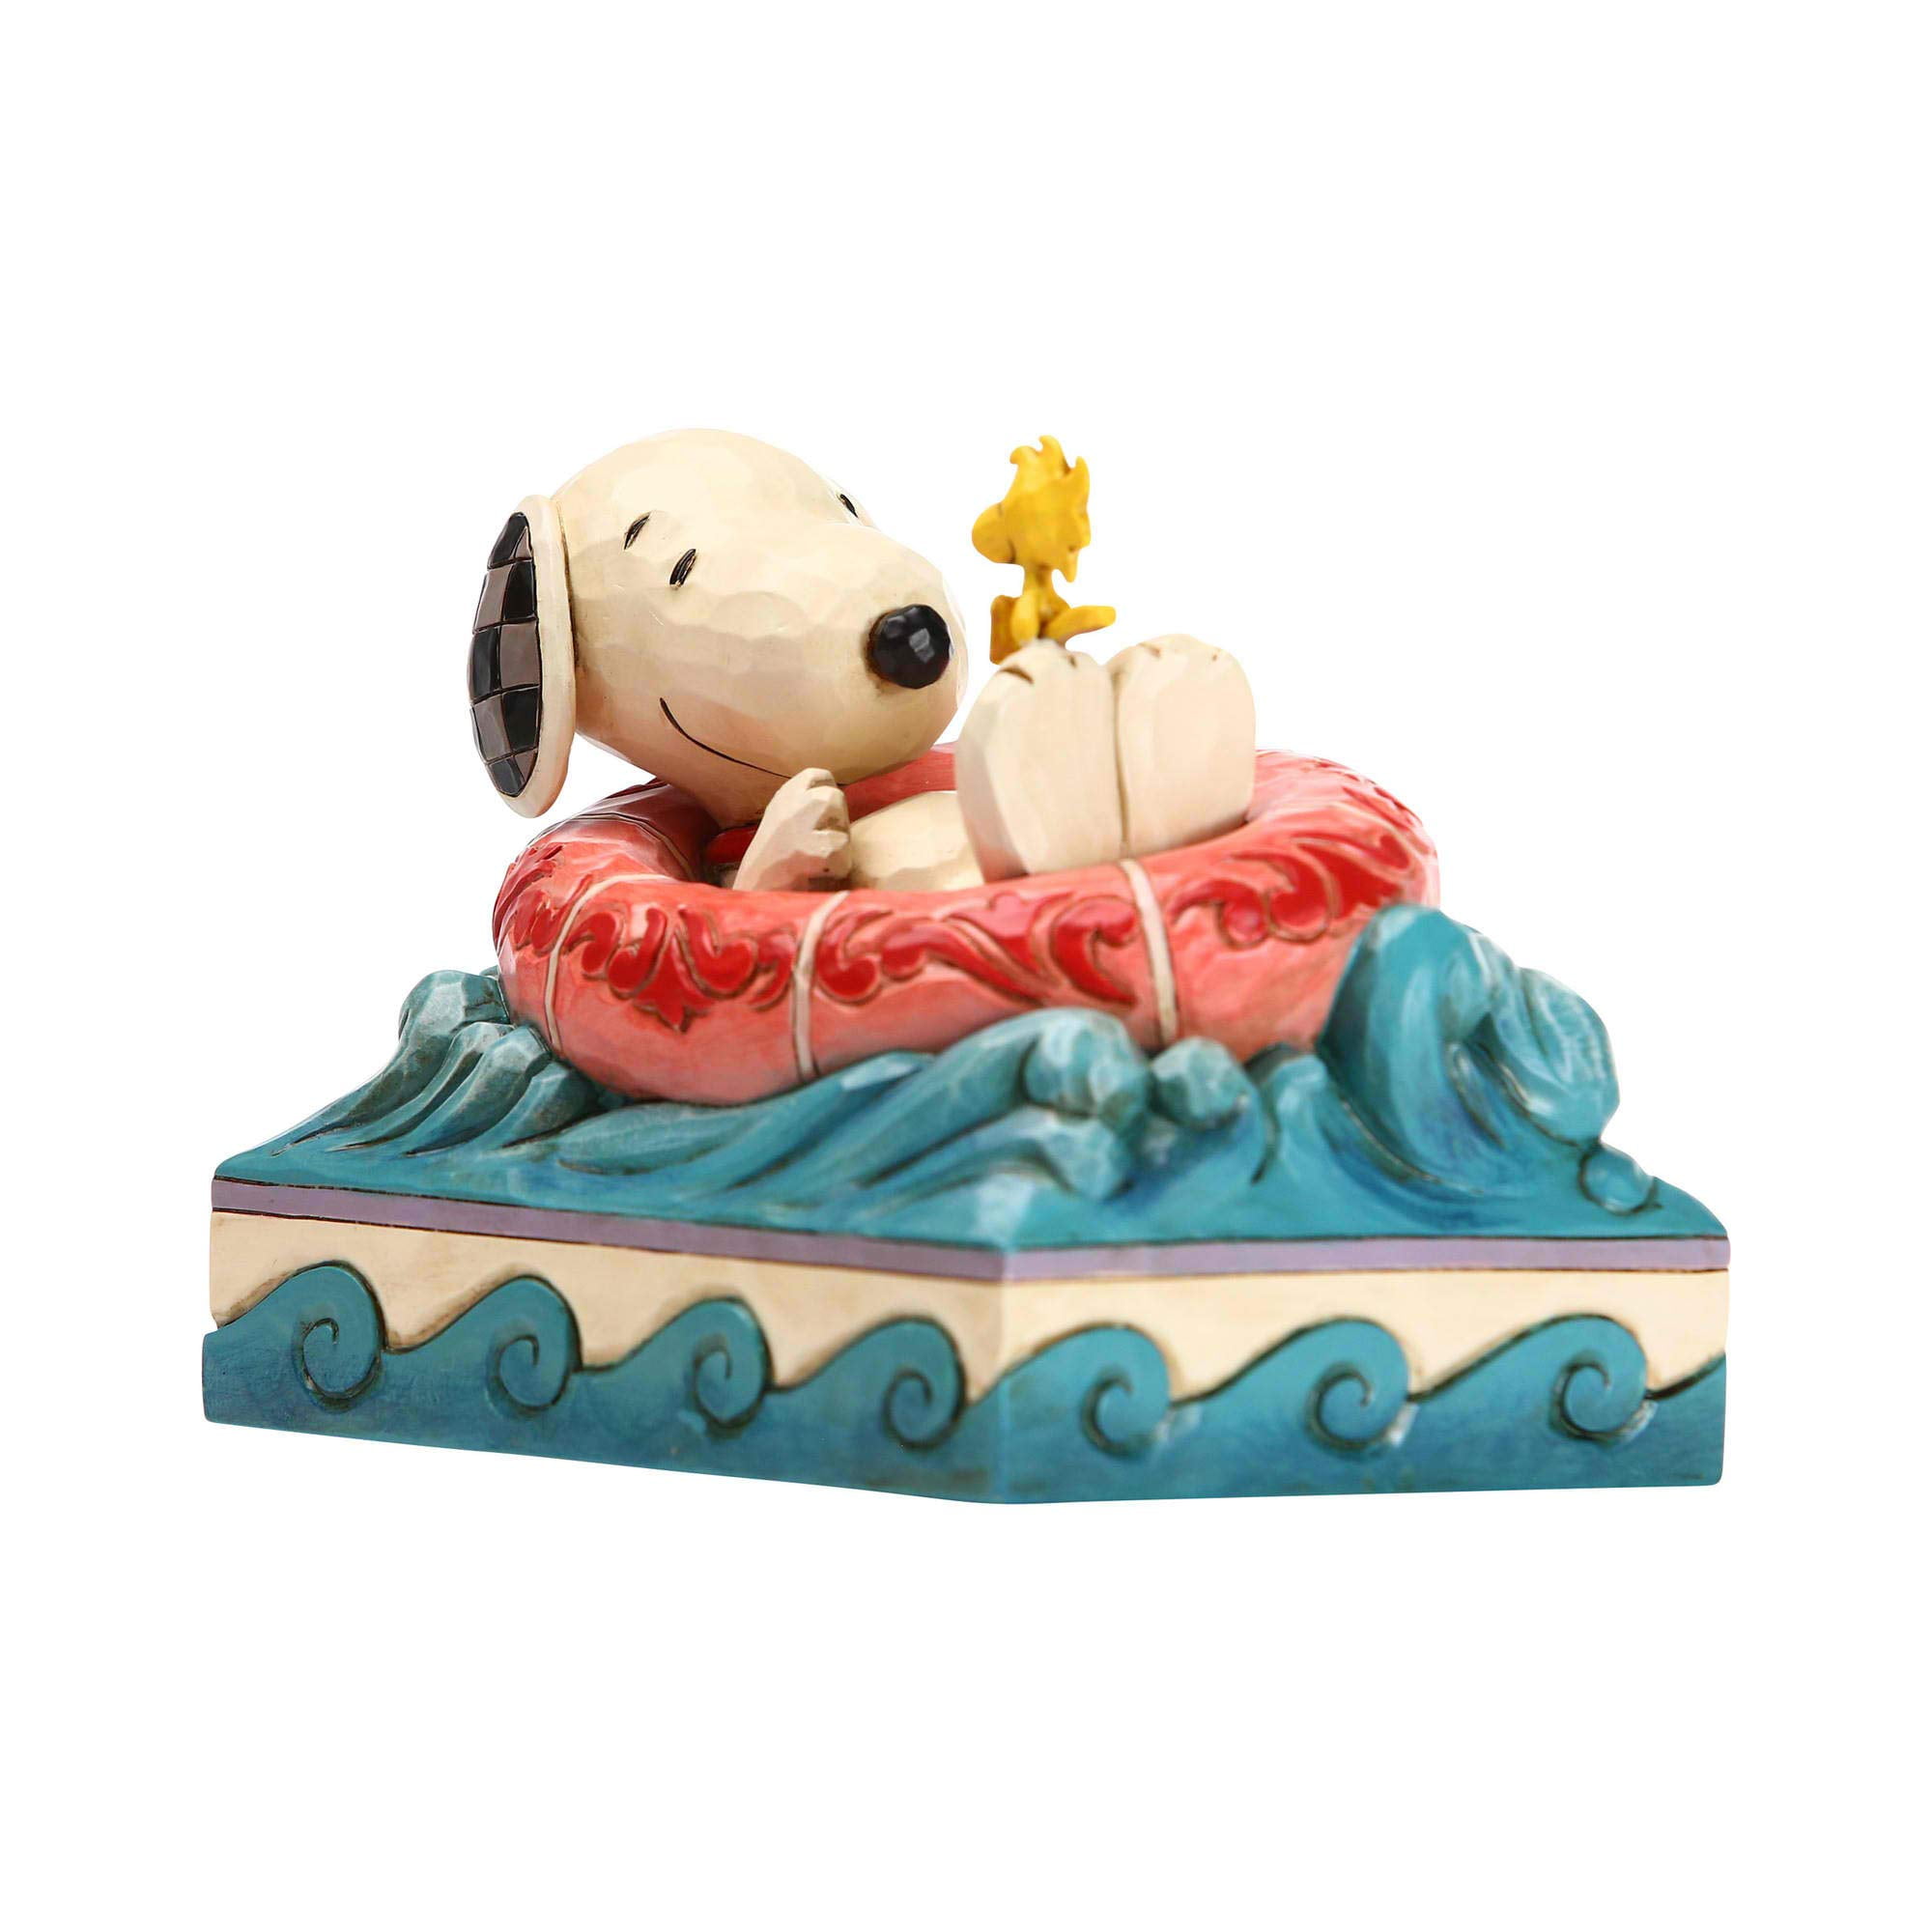 Enesco Peanuts by Jim Shore Snoopy in Birthday Cake Figurine, 5.5 